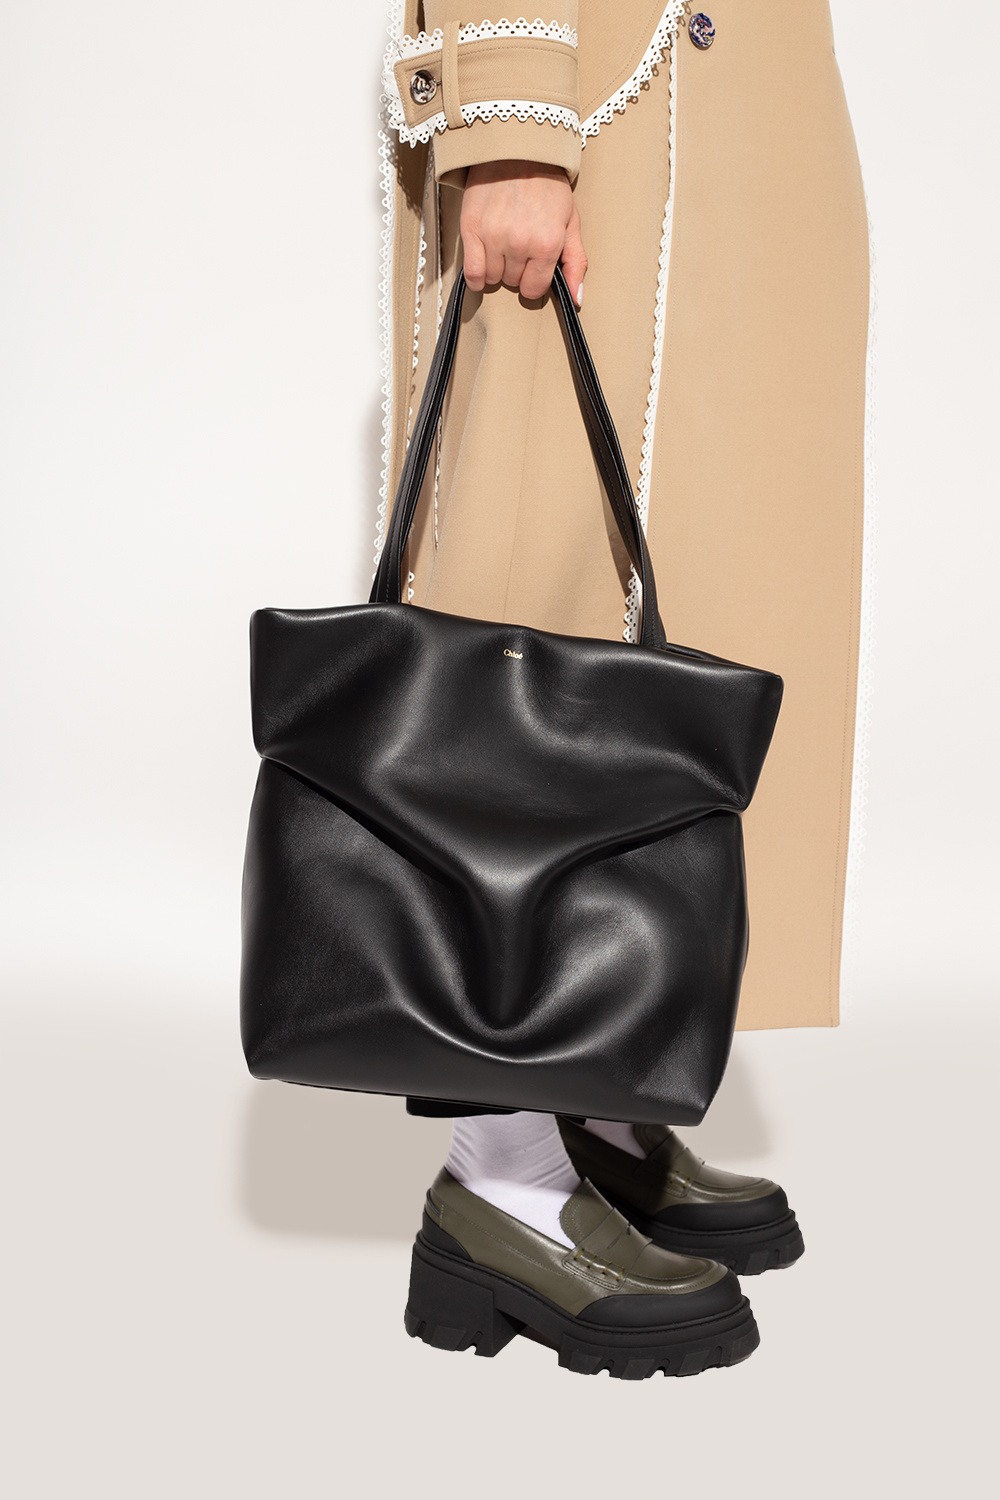 Chloé ‘Judy’ shopper bag